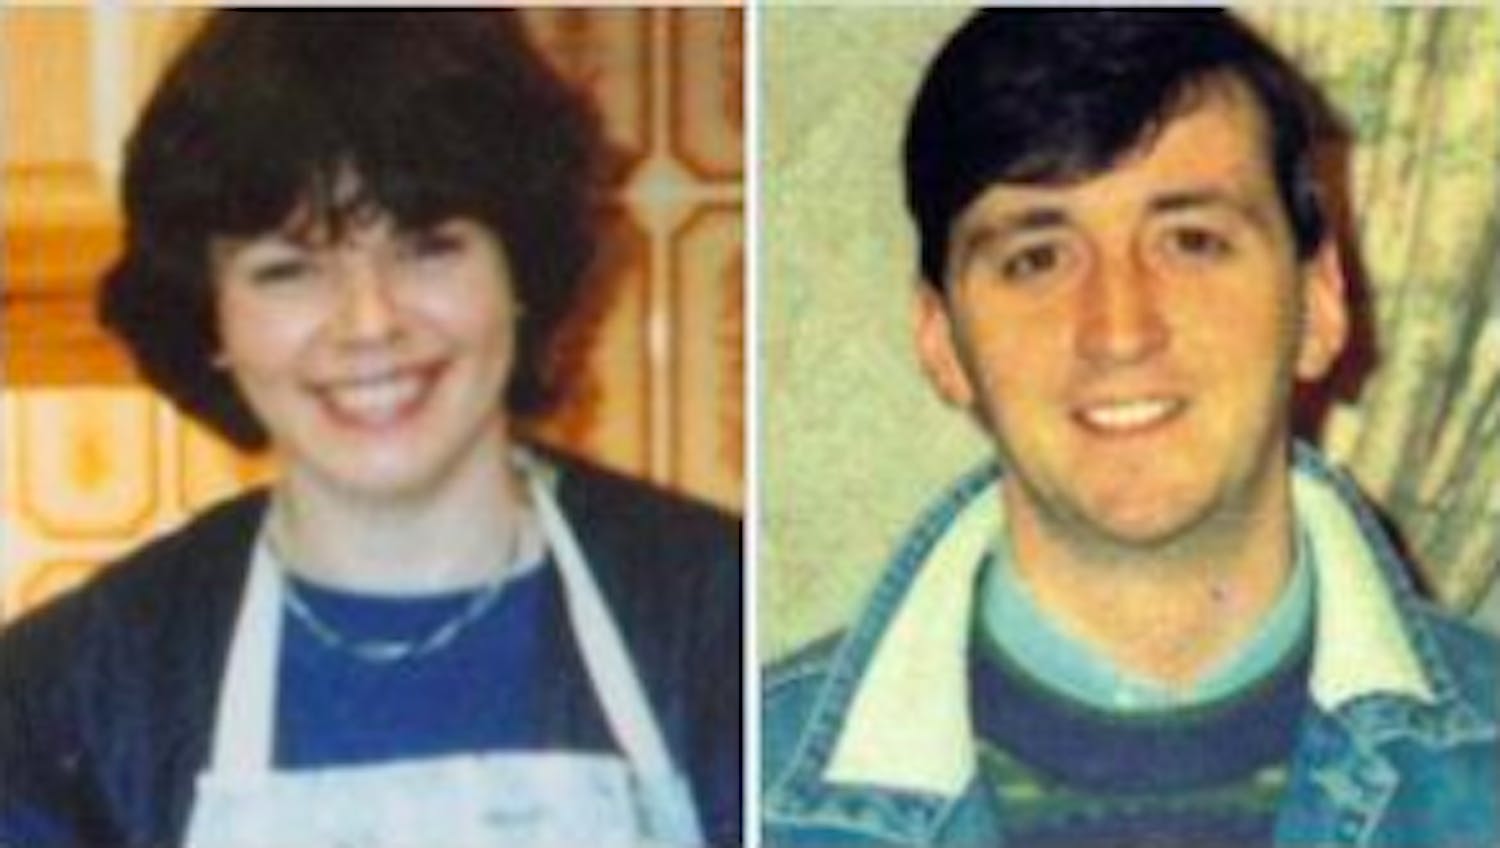 75 - Pathological: The murders of Lesley Clarke & Trevor Buchanan